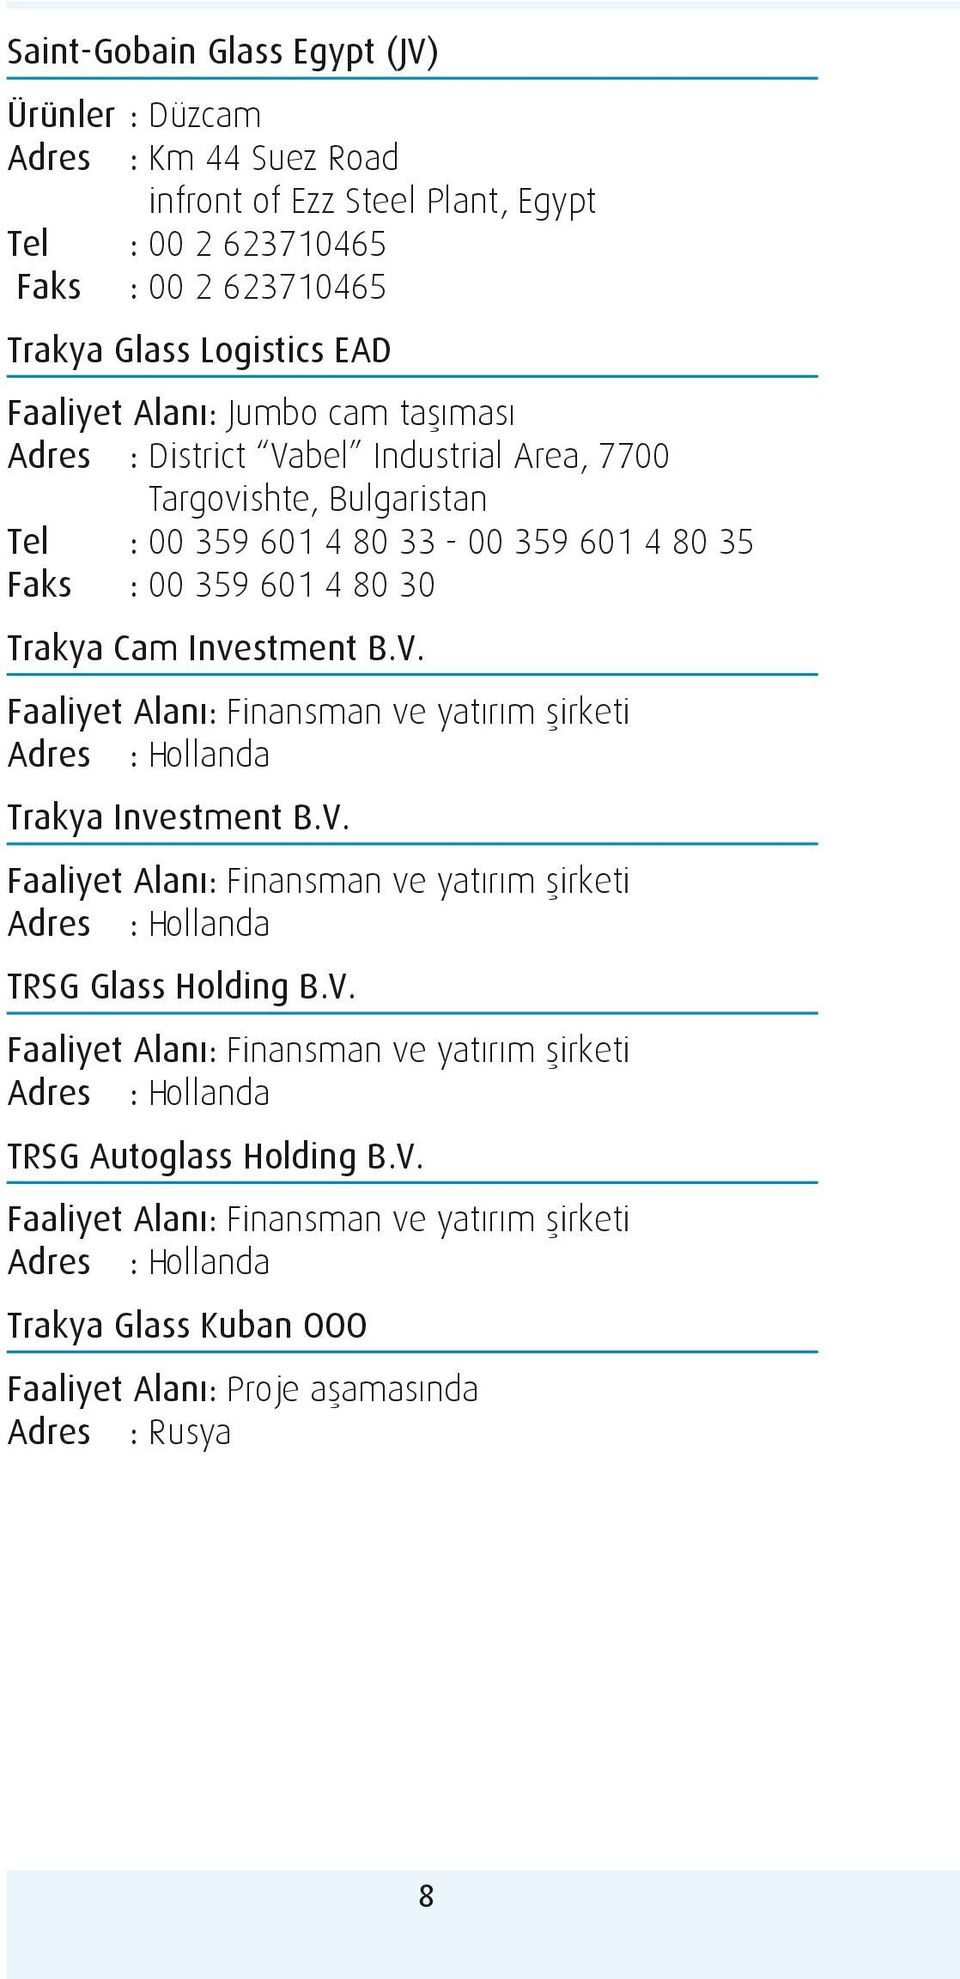 V. Faaliyet Alanı: Finansman ve yatırım şirketi Adres : Hollanda TRSG Glass Holding B.V. Faaliyet Alanı: Finansman ve yatırım şirketi Adres : Hollanda TRSG Autoglass Holding B.V. Faaliyet Alanı: Finansman ve yatırım şirketi Adres : Hollanda Trakya Glass Kuban OOO Faaliyet Alanı: Proje aşamasında Adres : Rusya 8